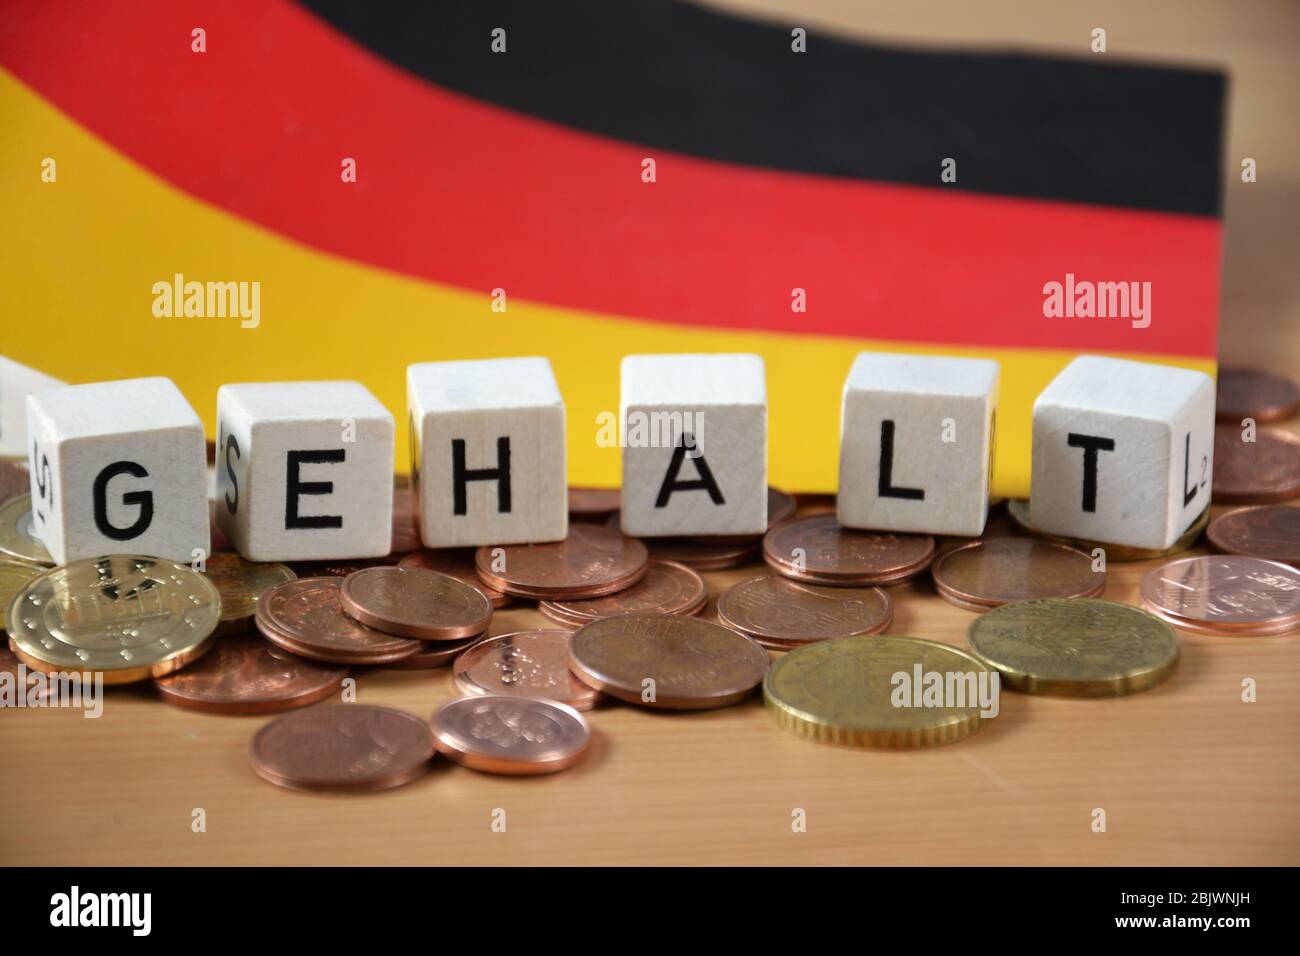 Gehalt - la parola tedesca per stipendio Foto Stock